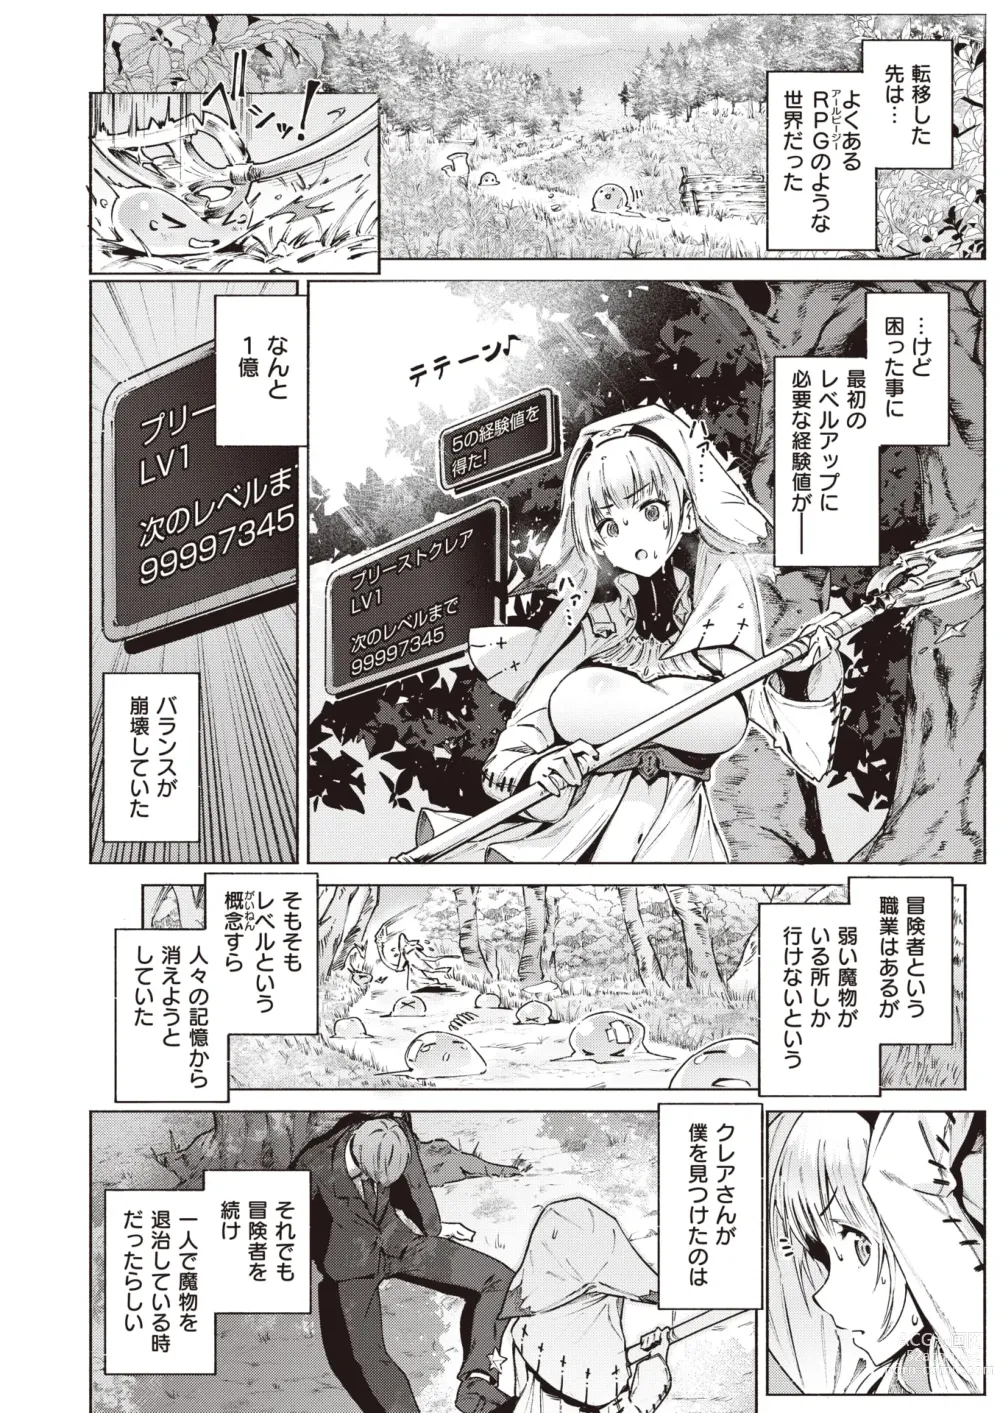 Page 5 of manga Isekai Rakuten Vol. 23